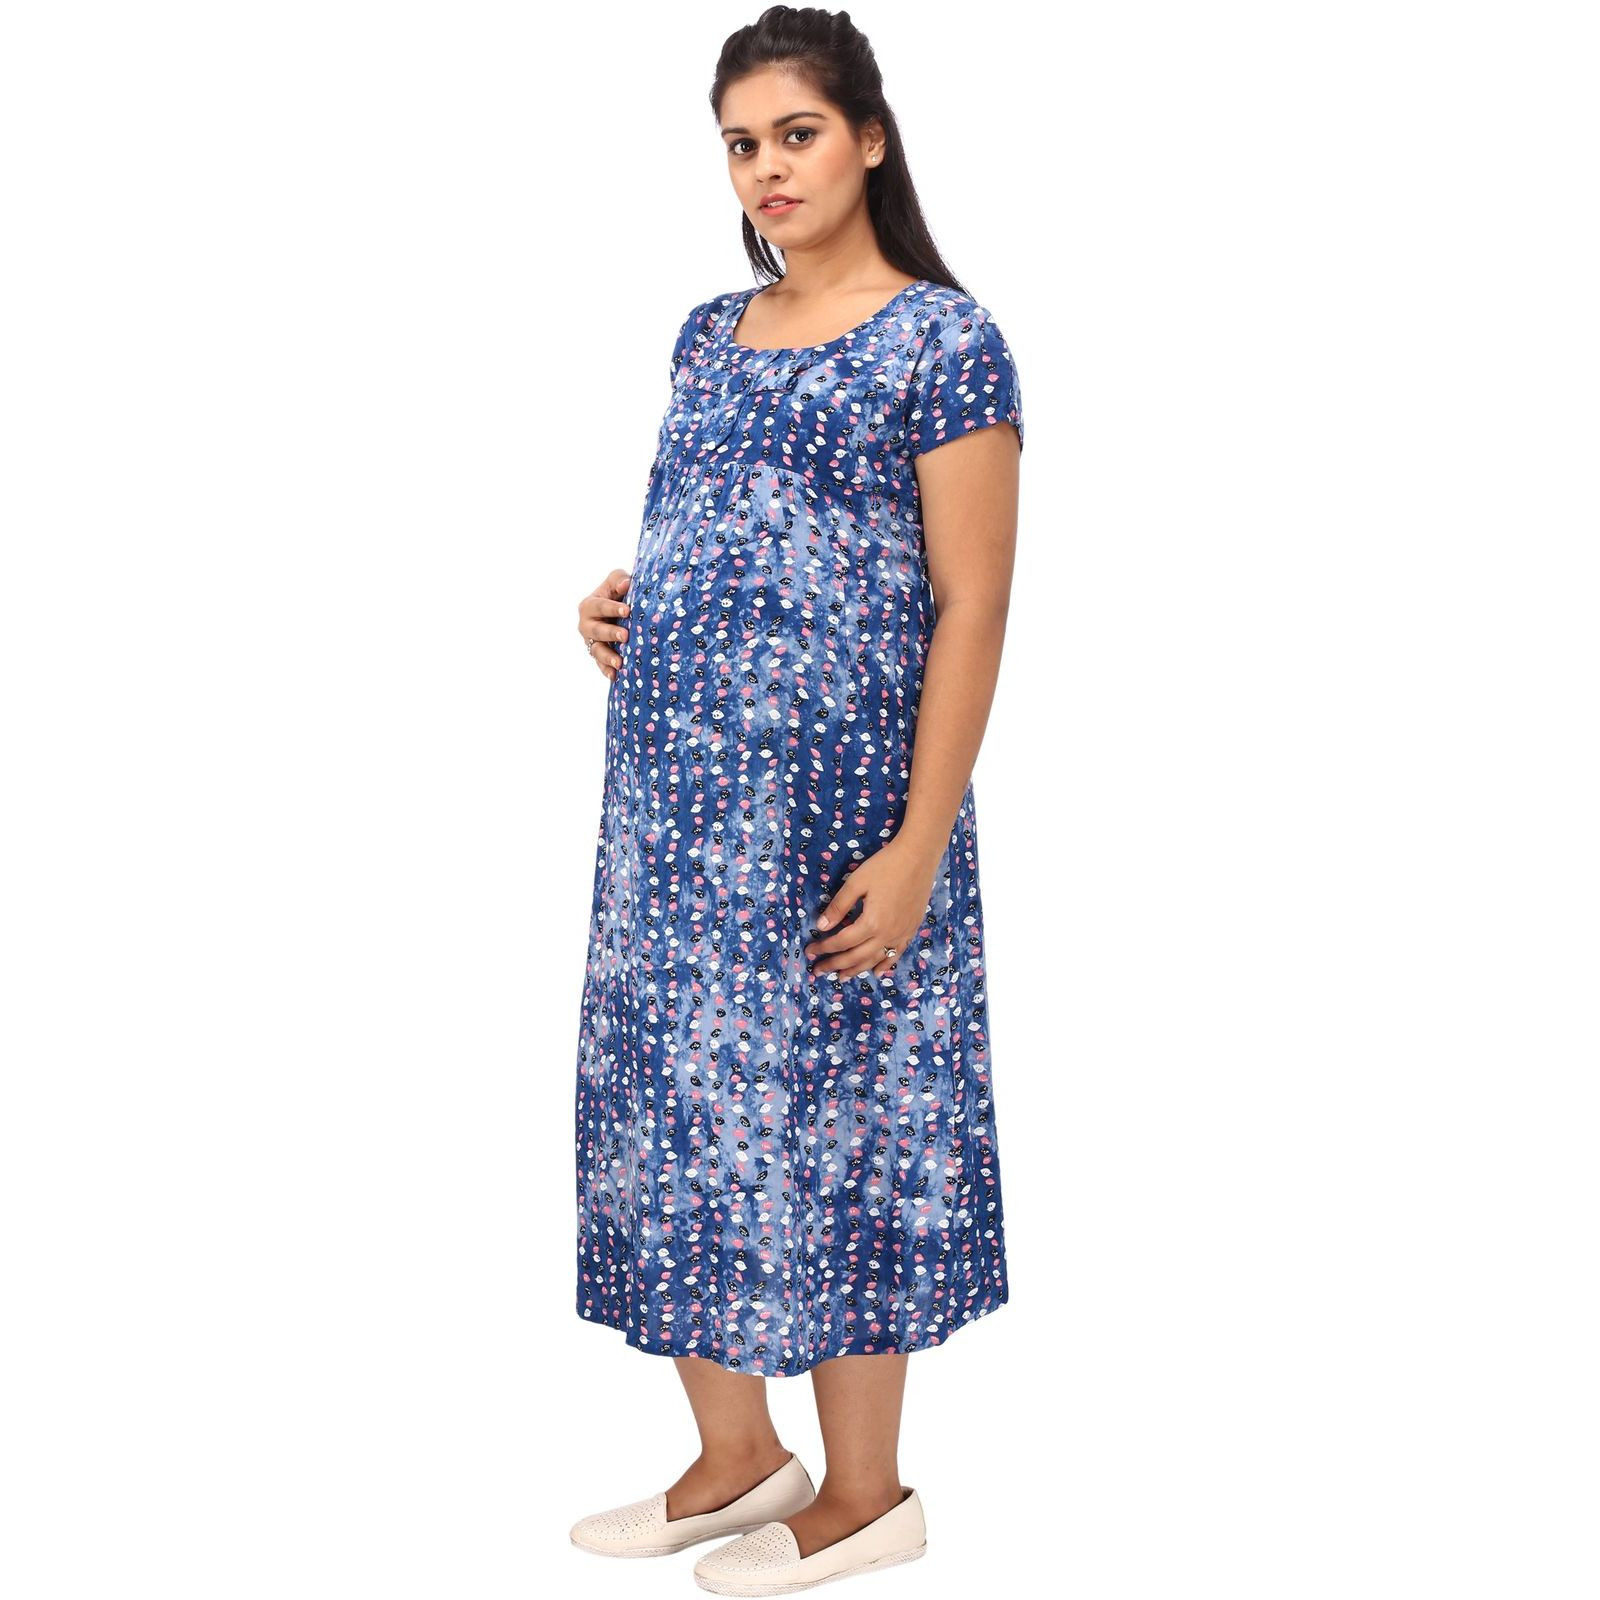 Mamma's Maternity Women's Leaf Printed Blue Maternity Dress (Size:L)